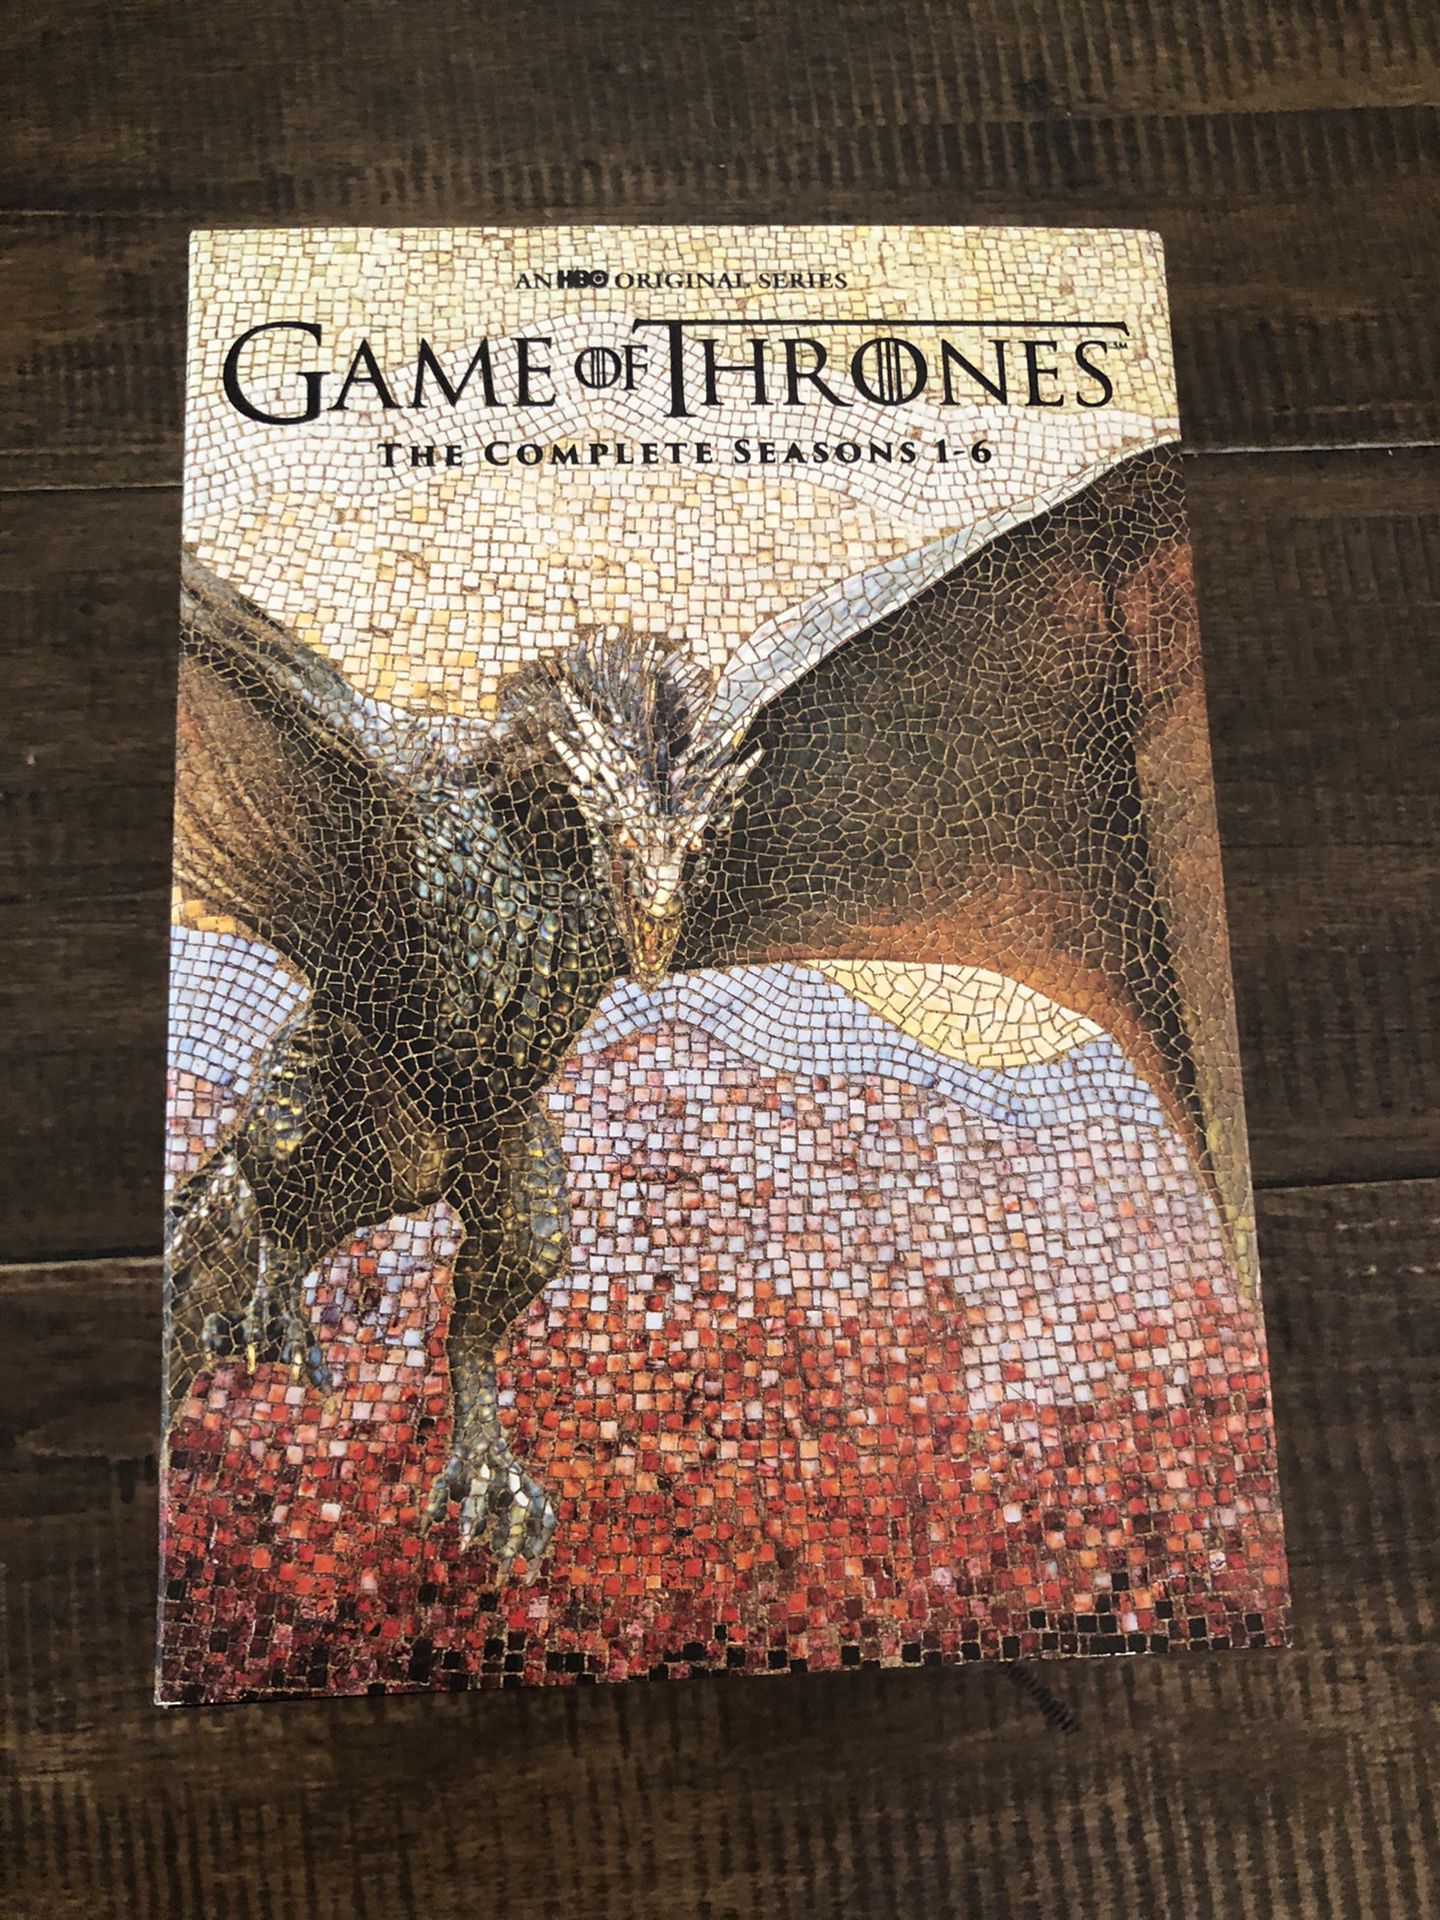 Game of Thrones Seasons 1-6 DVD box set